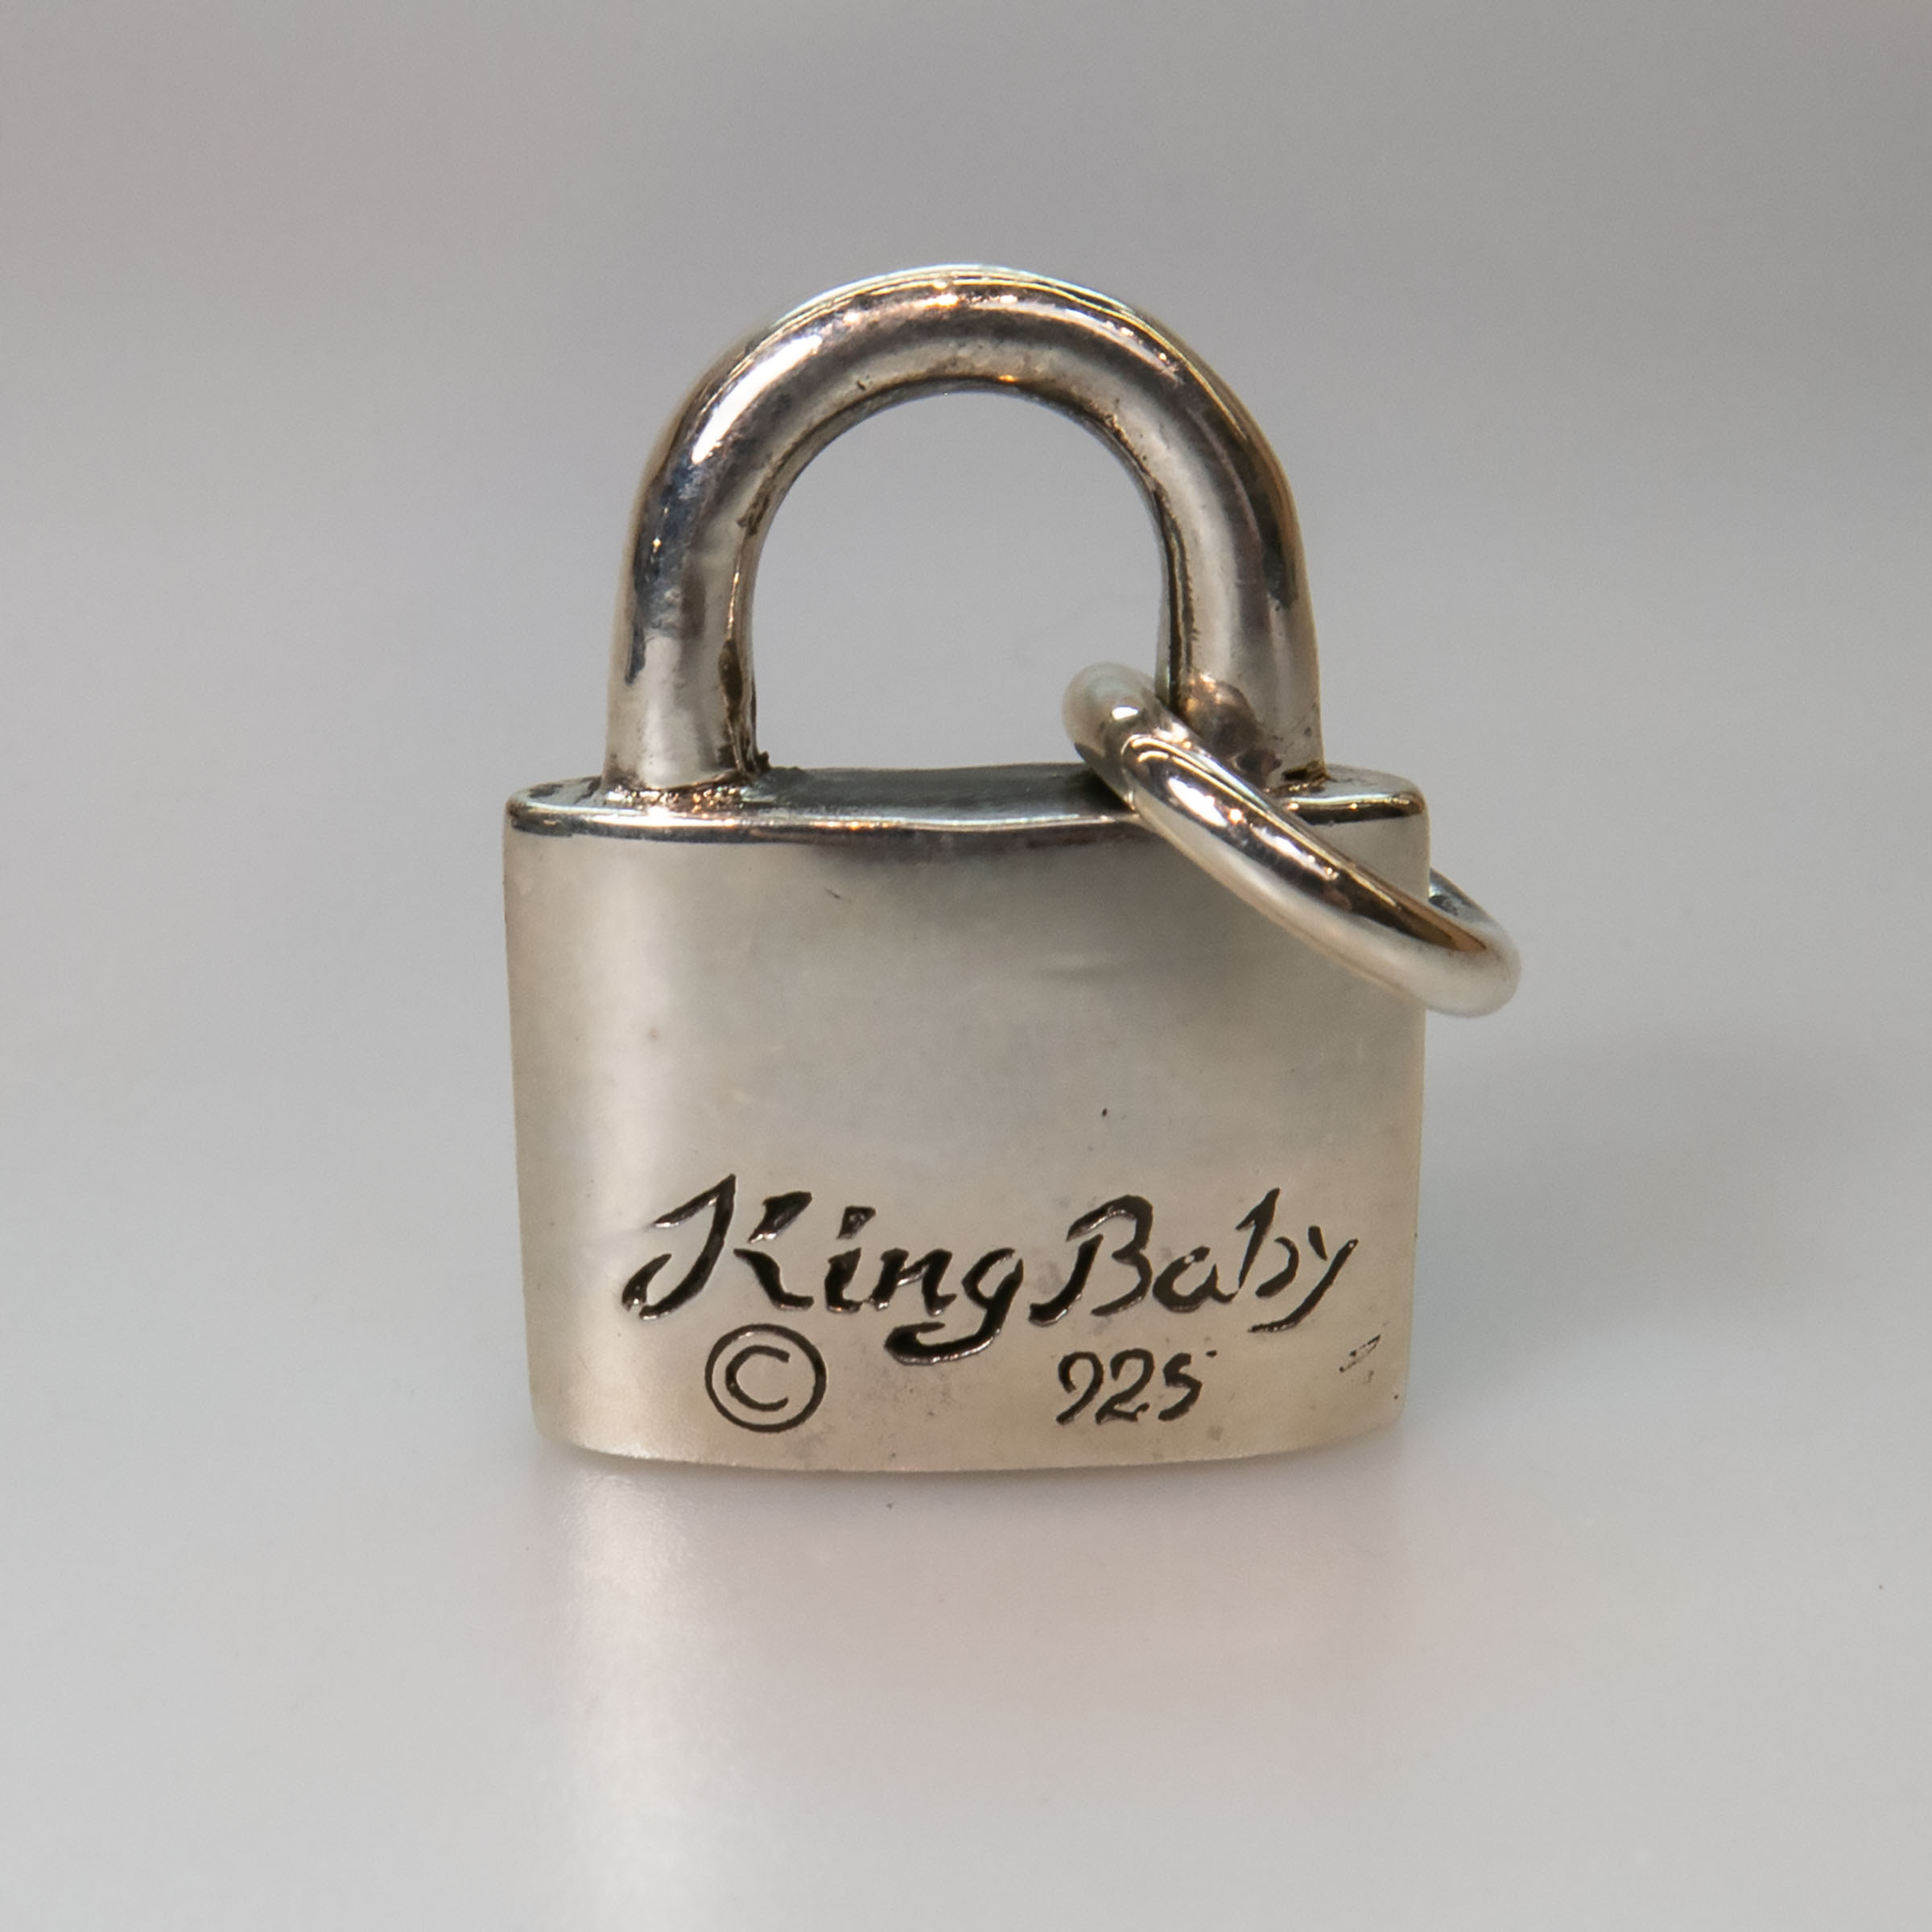 King Baby Studio Sterling Silver 'Padlock' Pendant